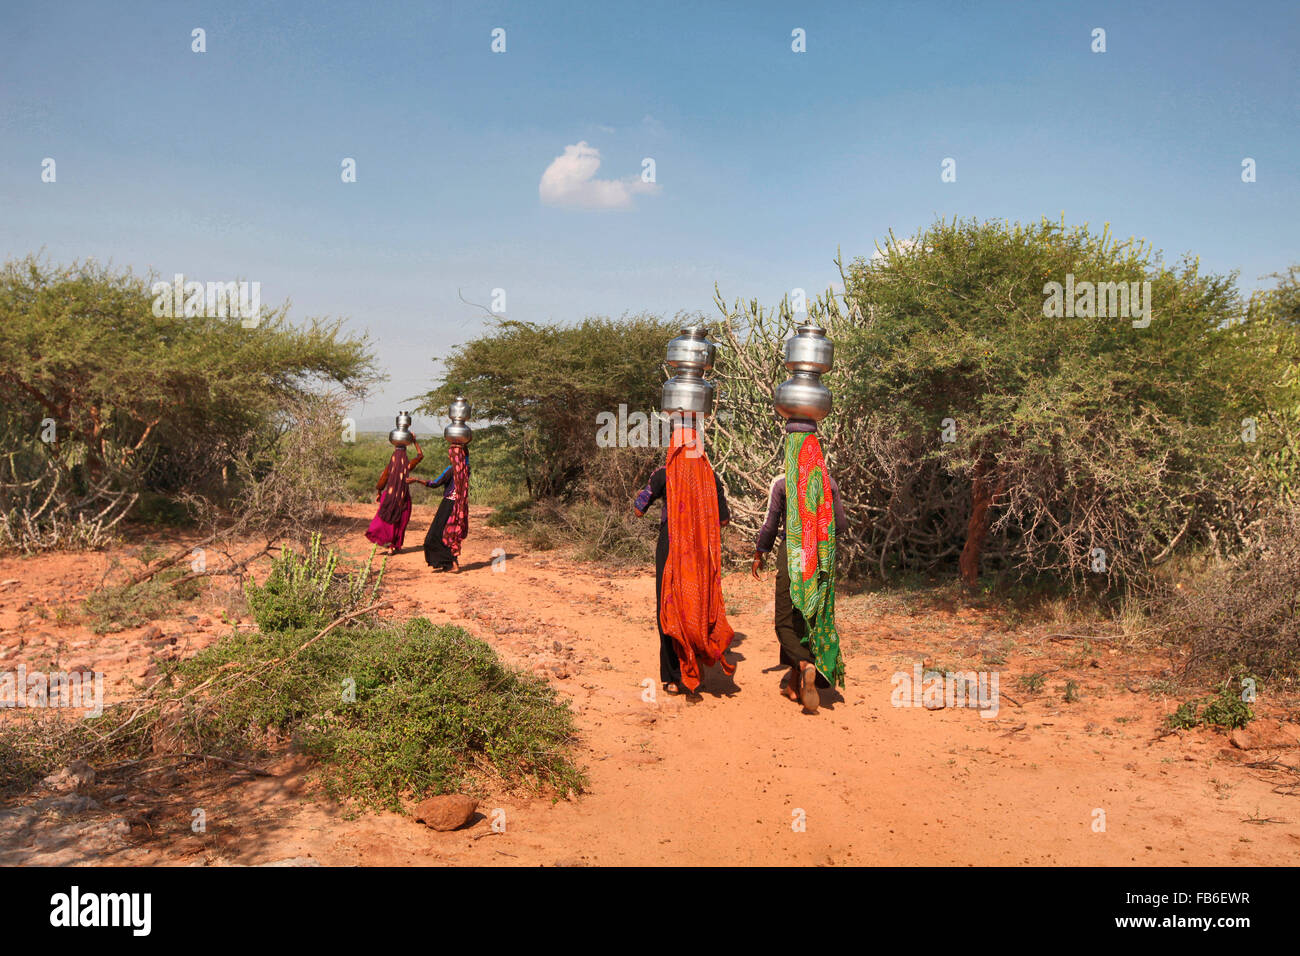 Dhebaria Rabari, tribu des femmes portant des pots, l'eau du district de Kutch, Gujarat, Inde Banque D'Images